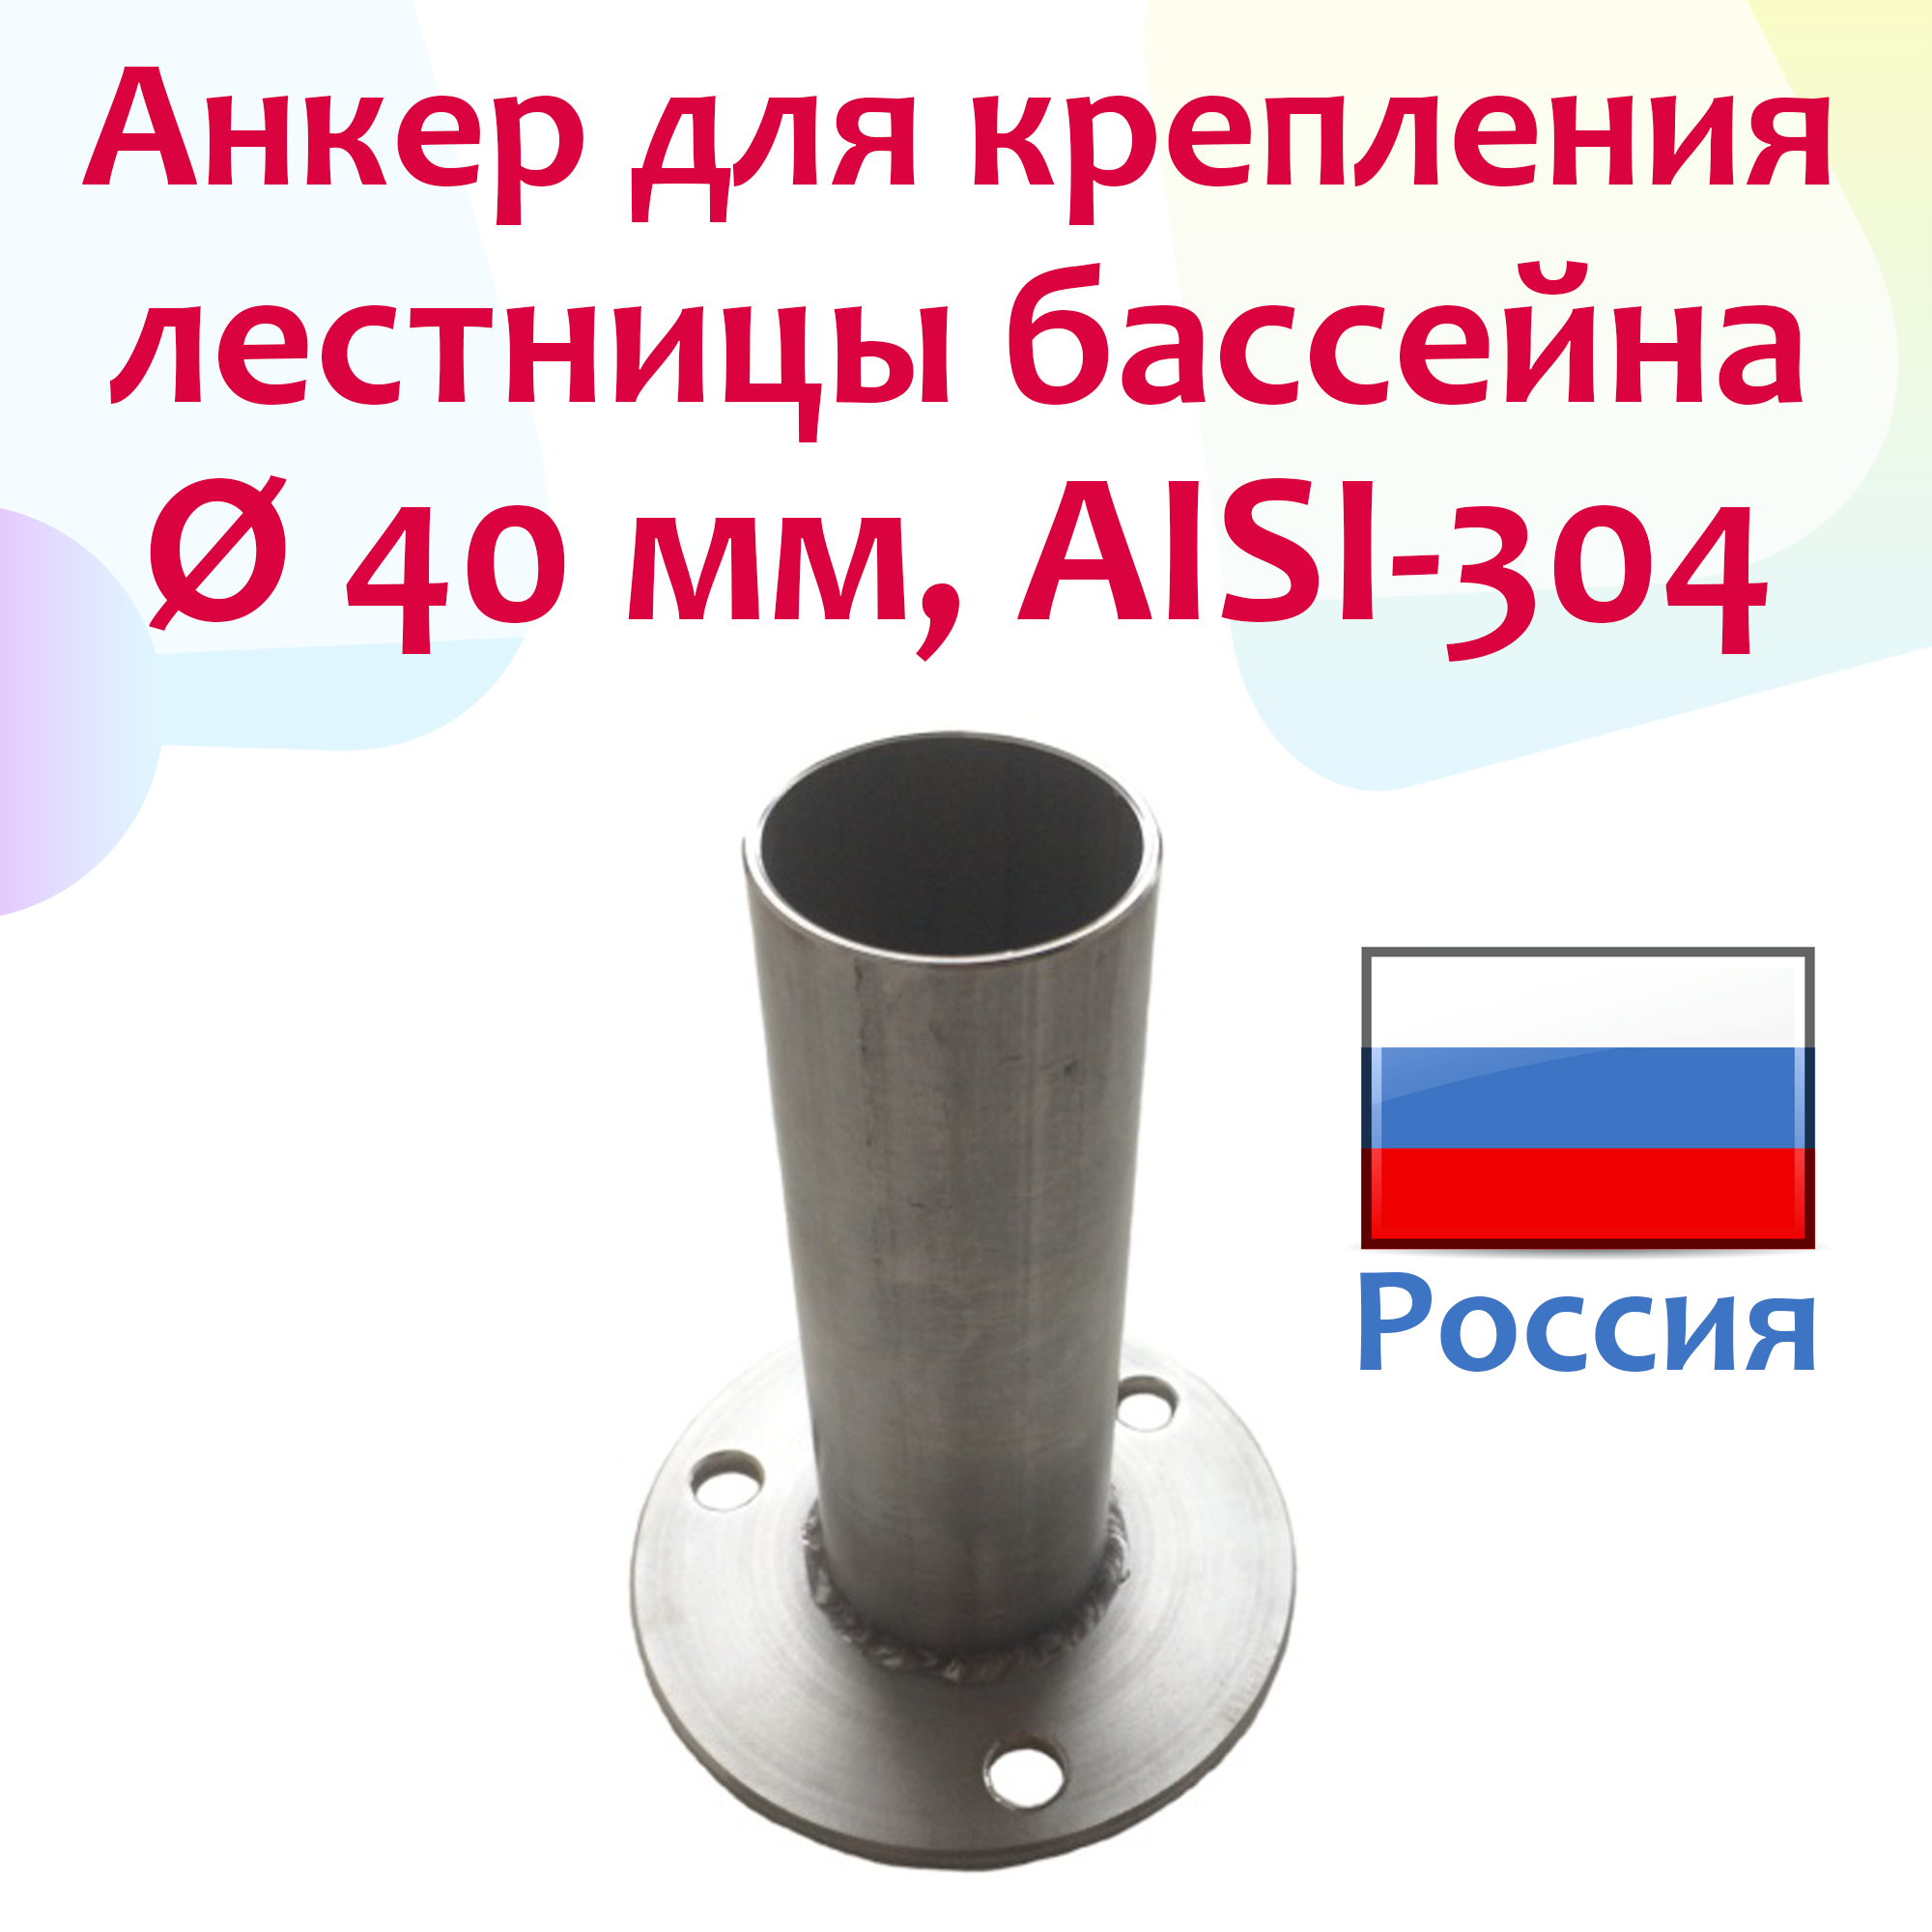 Стакан / Анкер для крепления лестницы - d 40 мм, AISI-304 - Runvil Pools, Россия